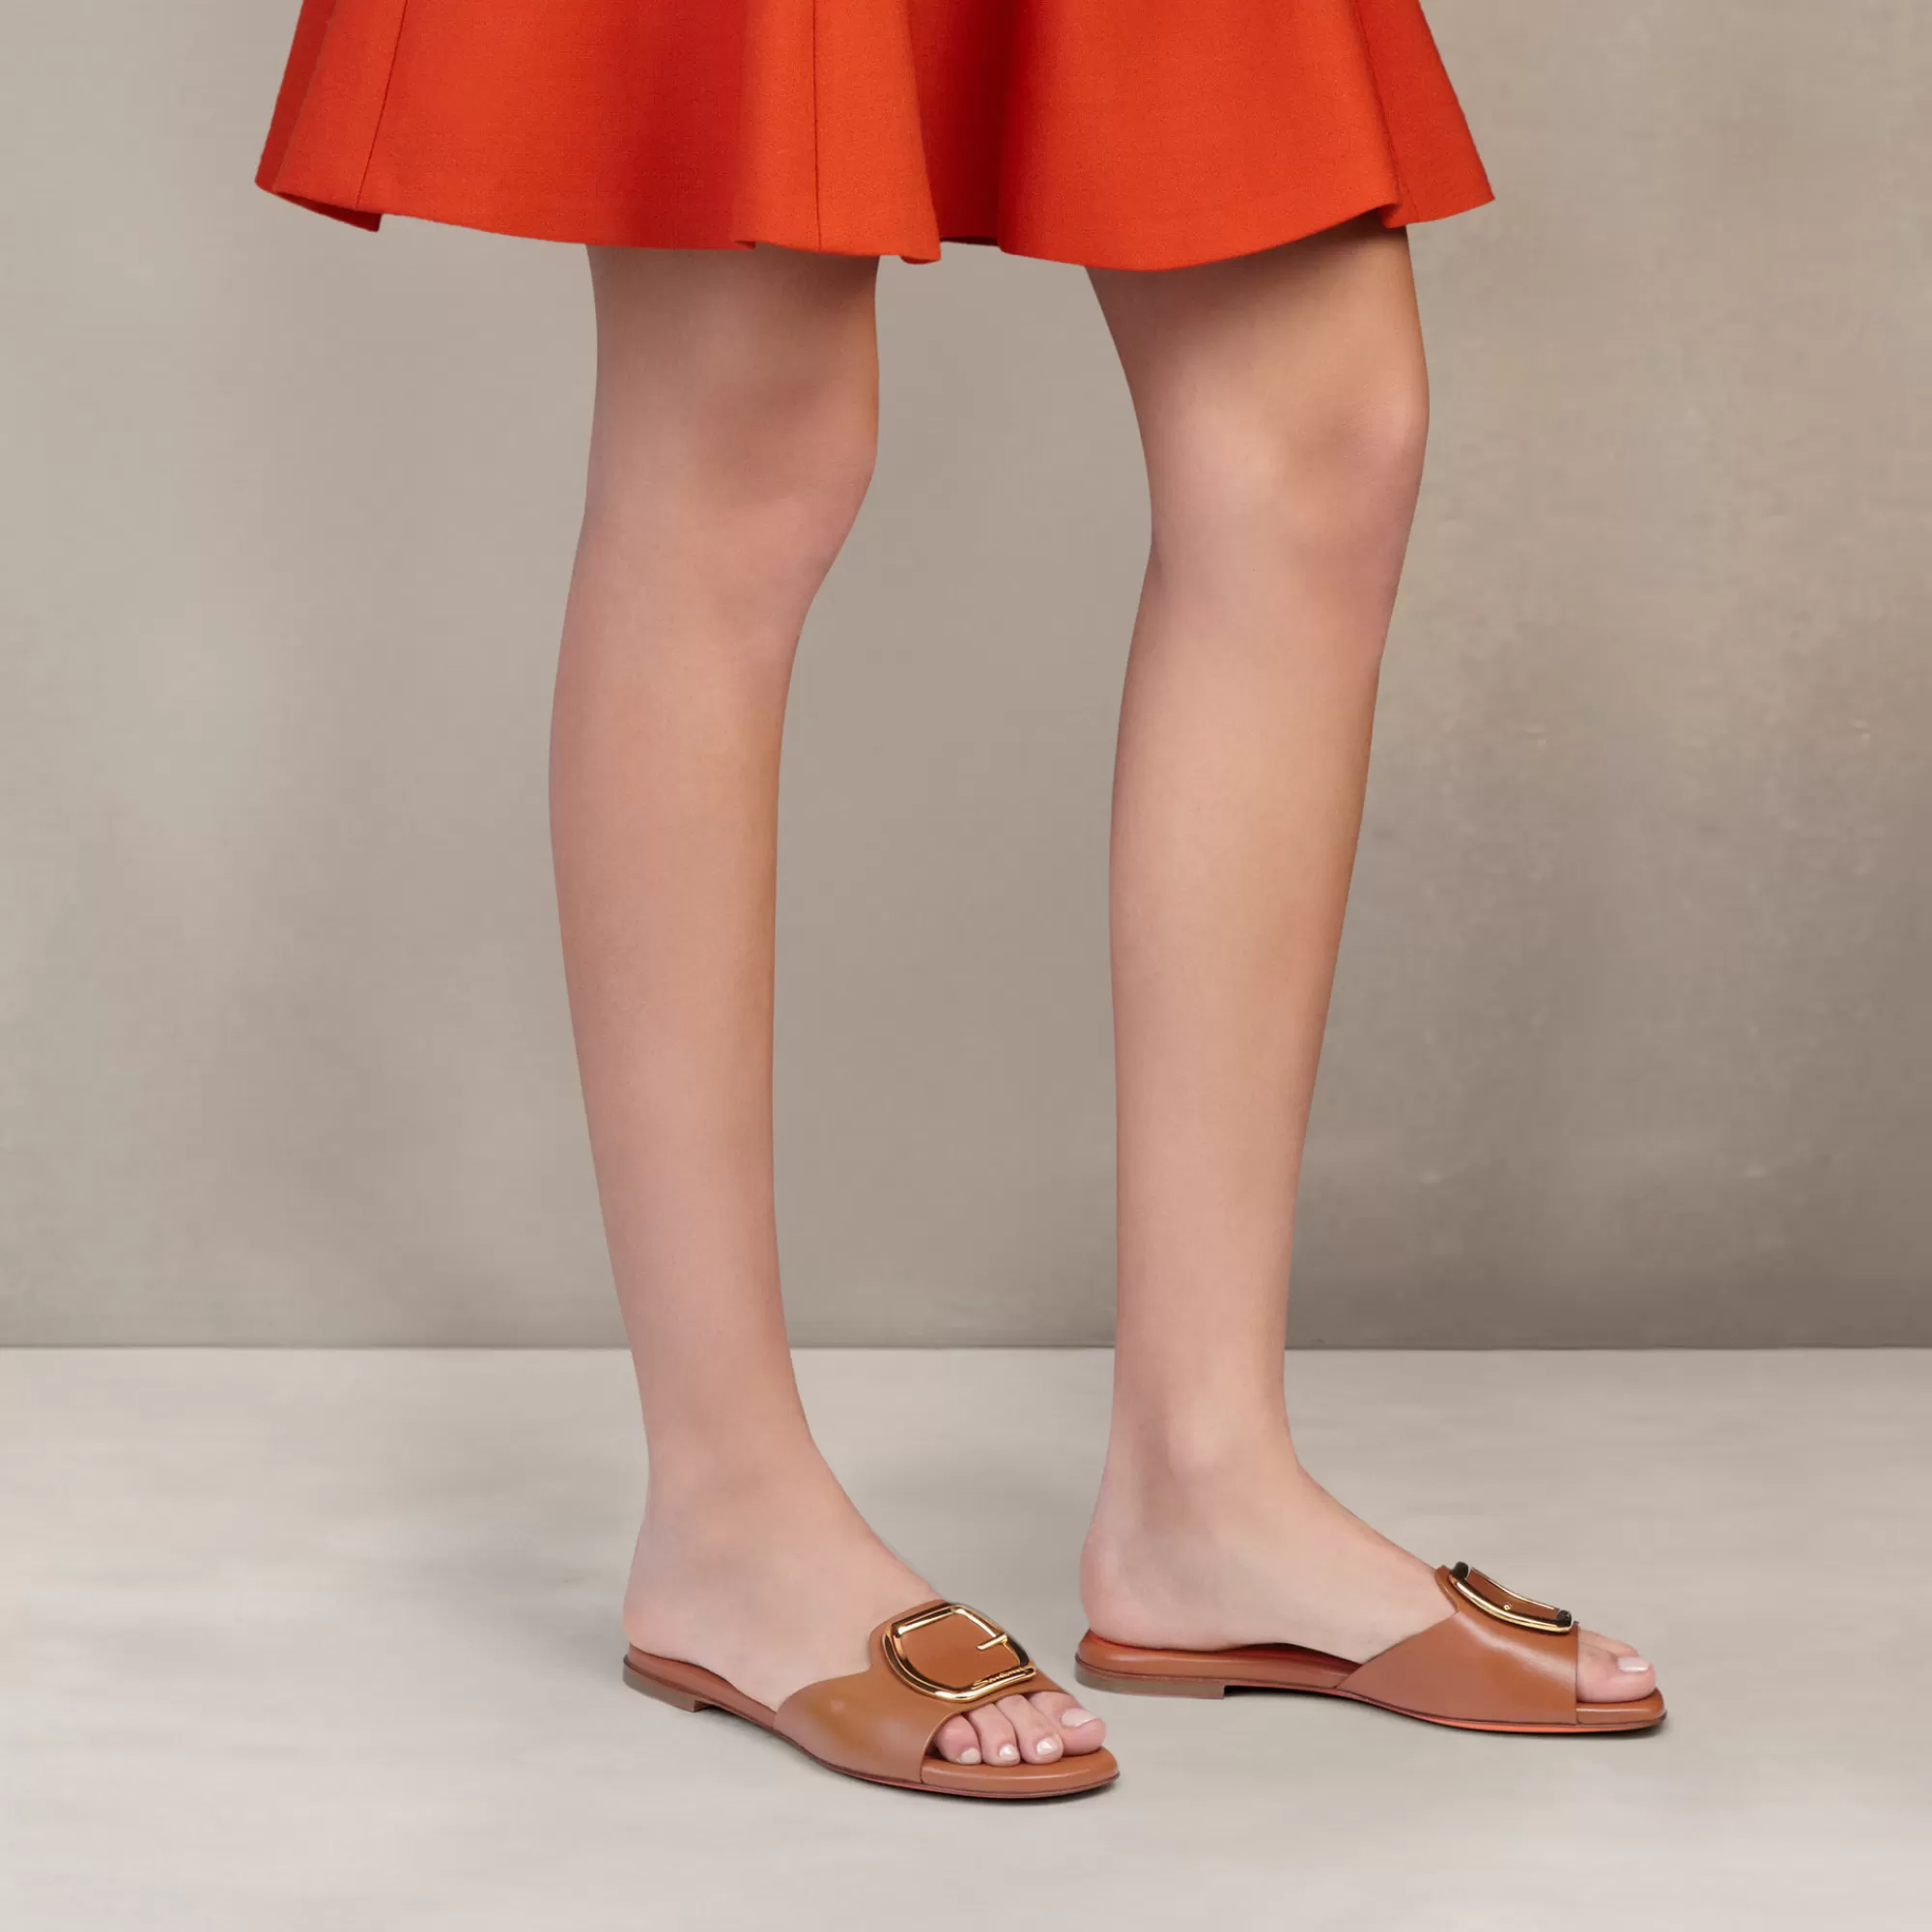 Online Sandalo slide in pelle marrone Vedi tutte le calzature | Sandali